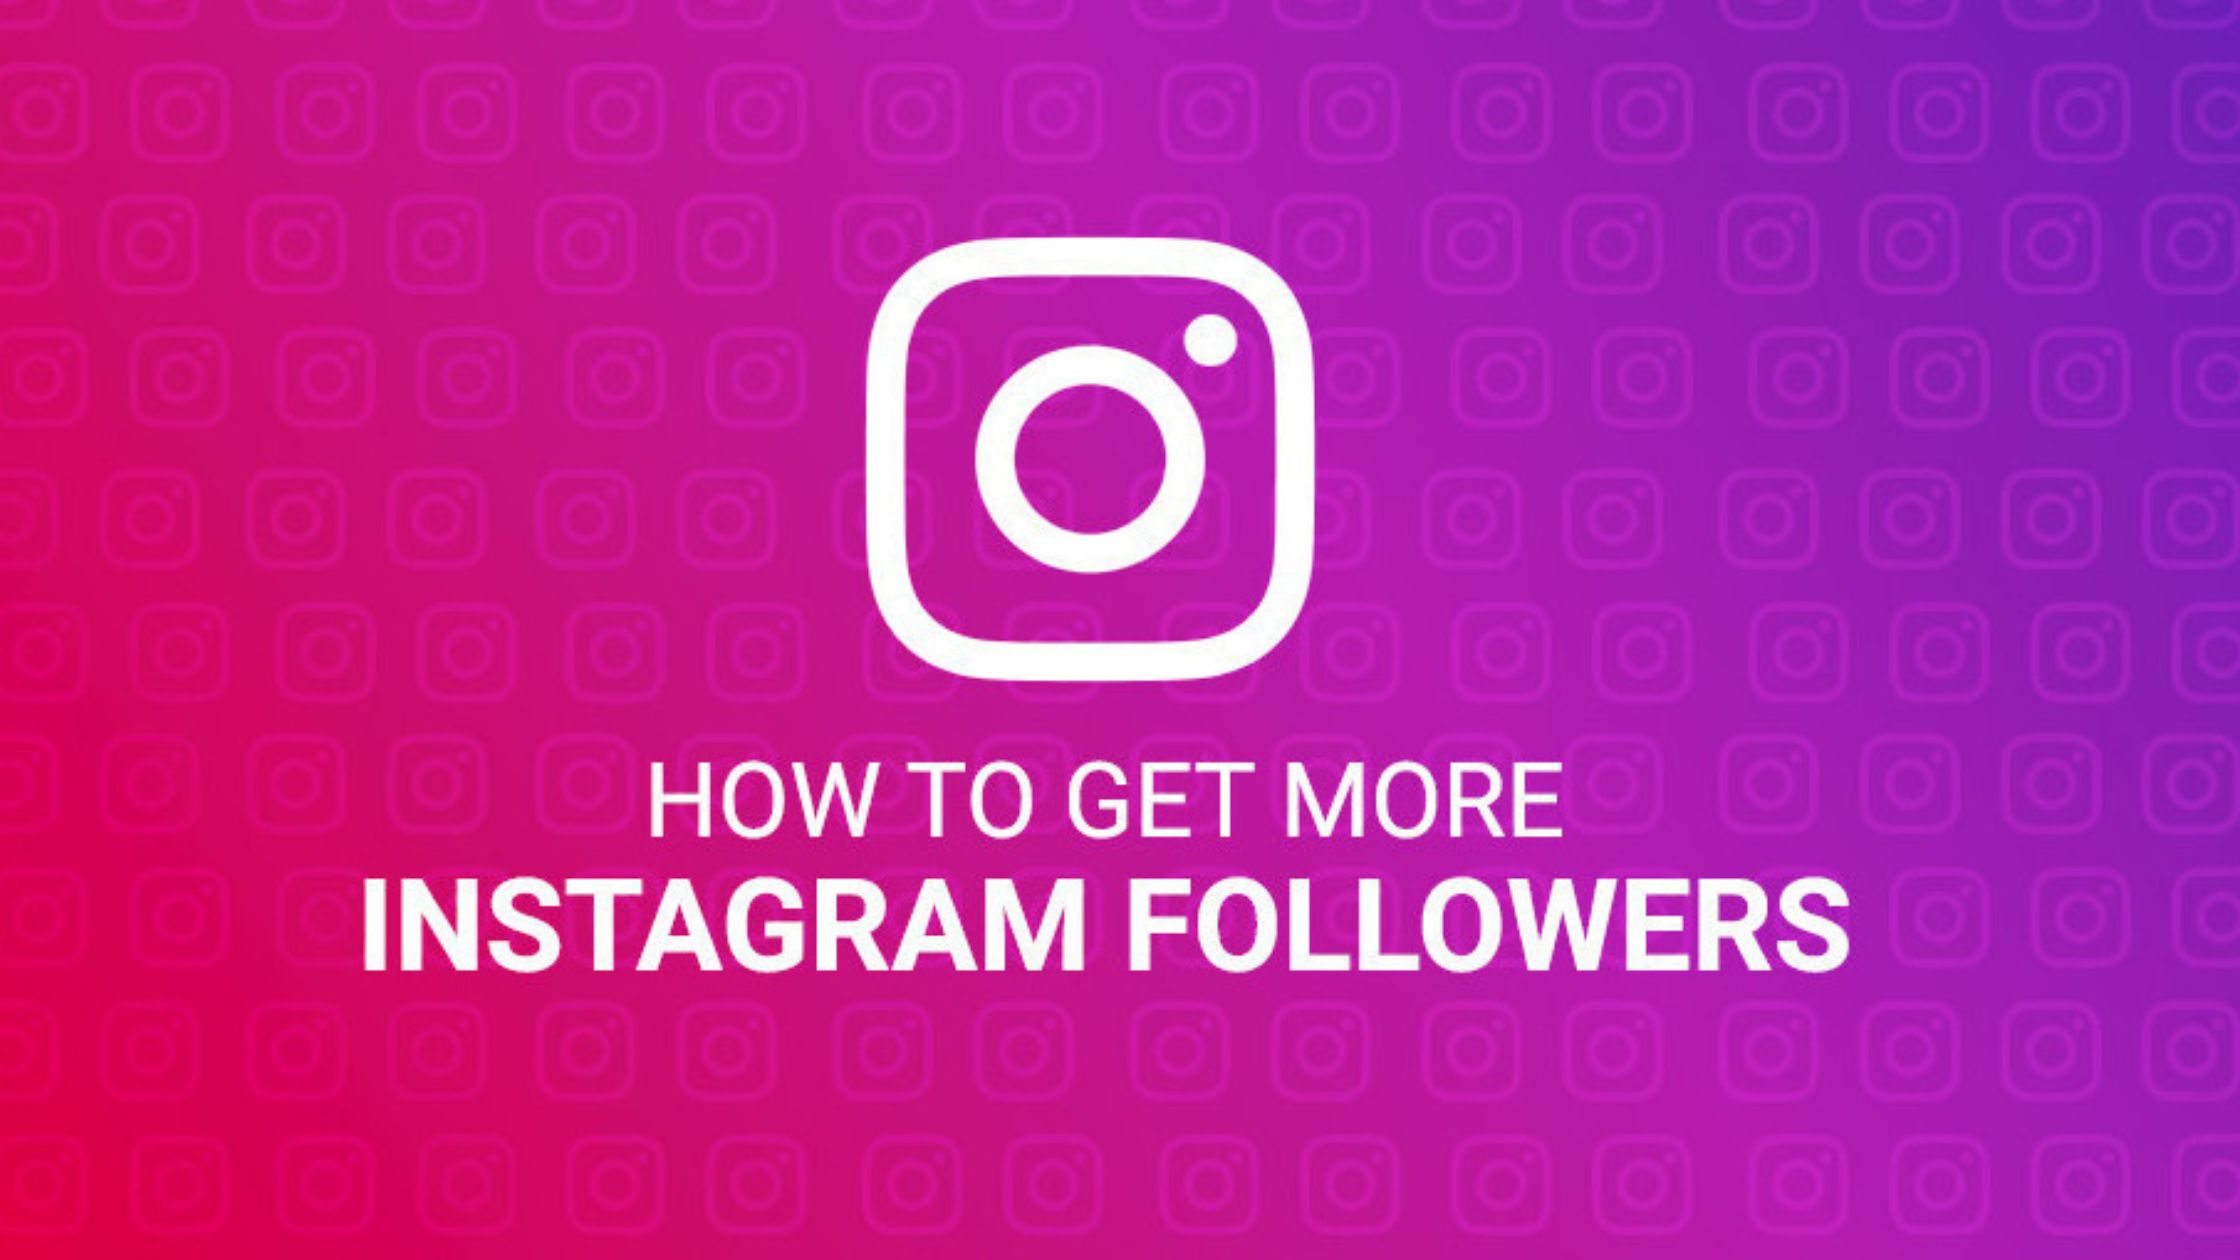 How Do I Get More Followers on Instagram?